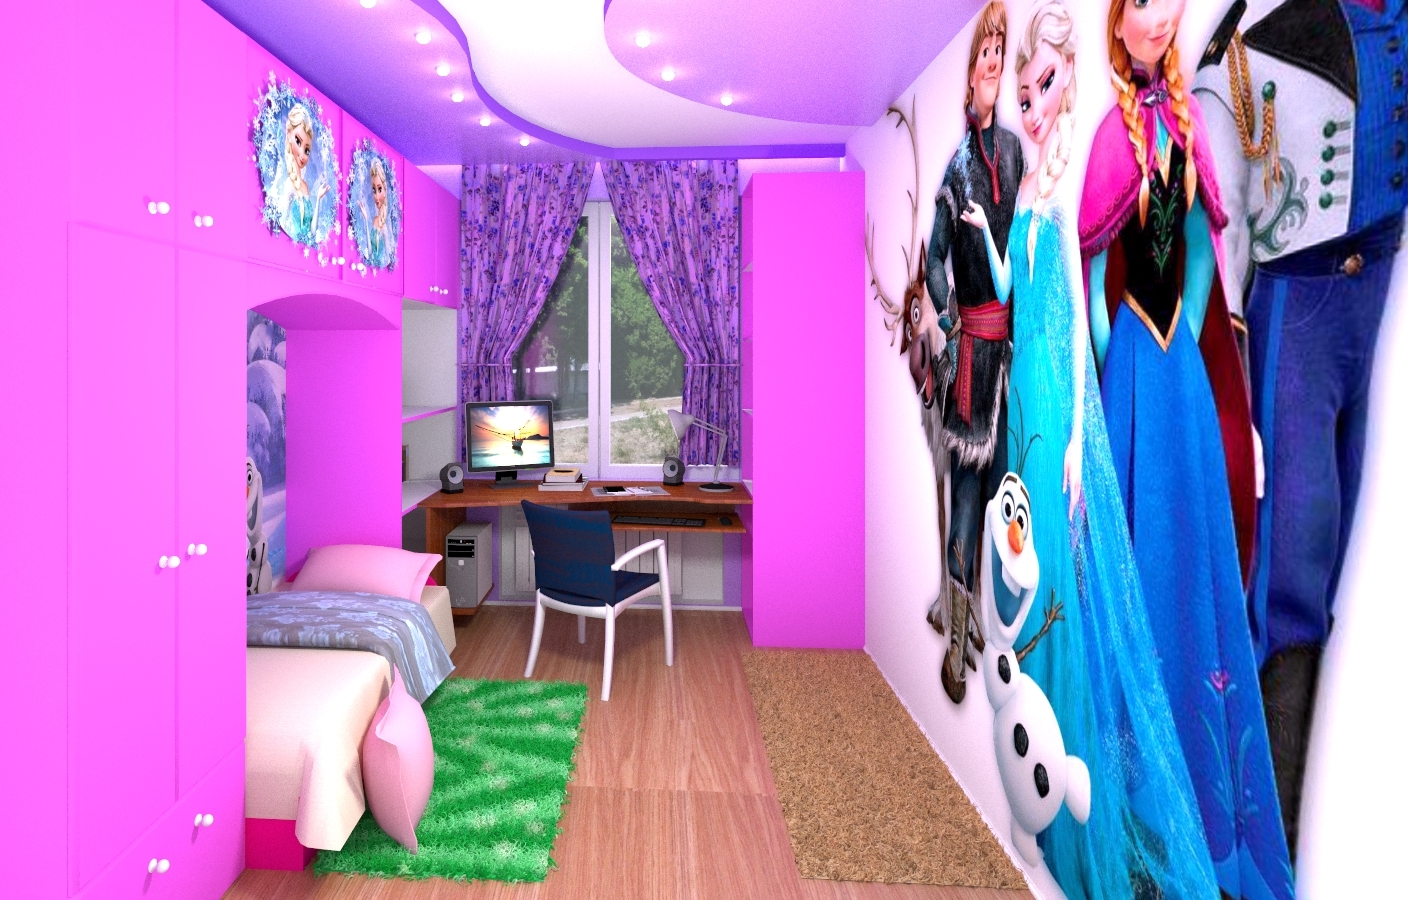 Çocuk odası in SketchUp vray 3.0 resim